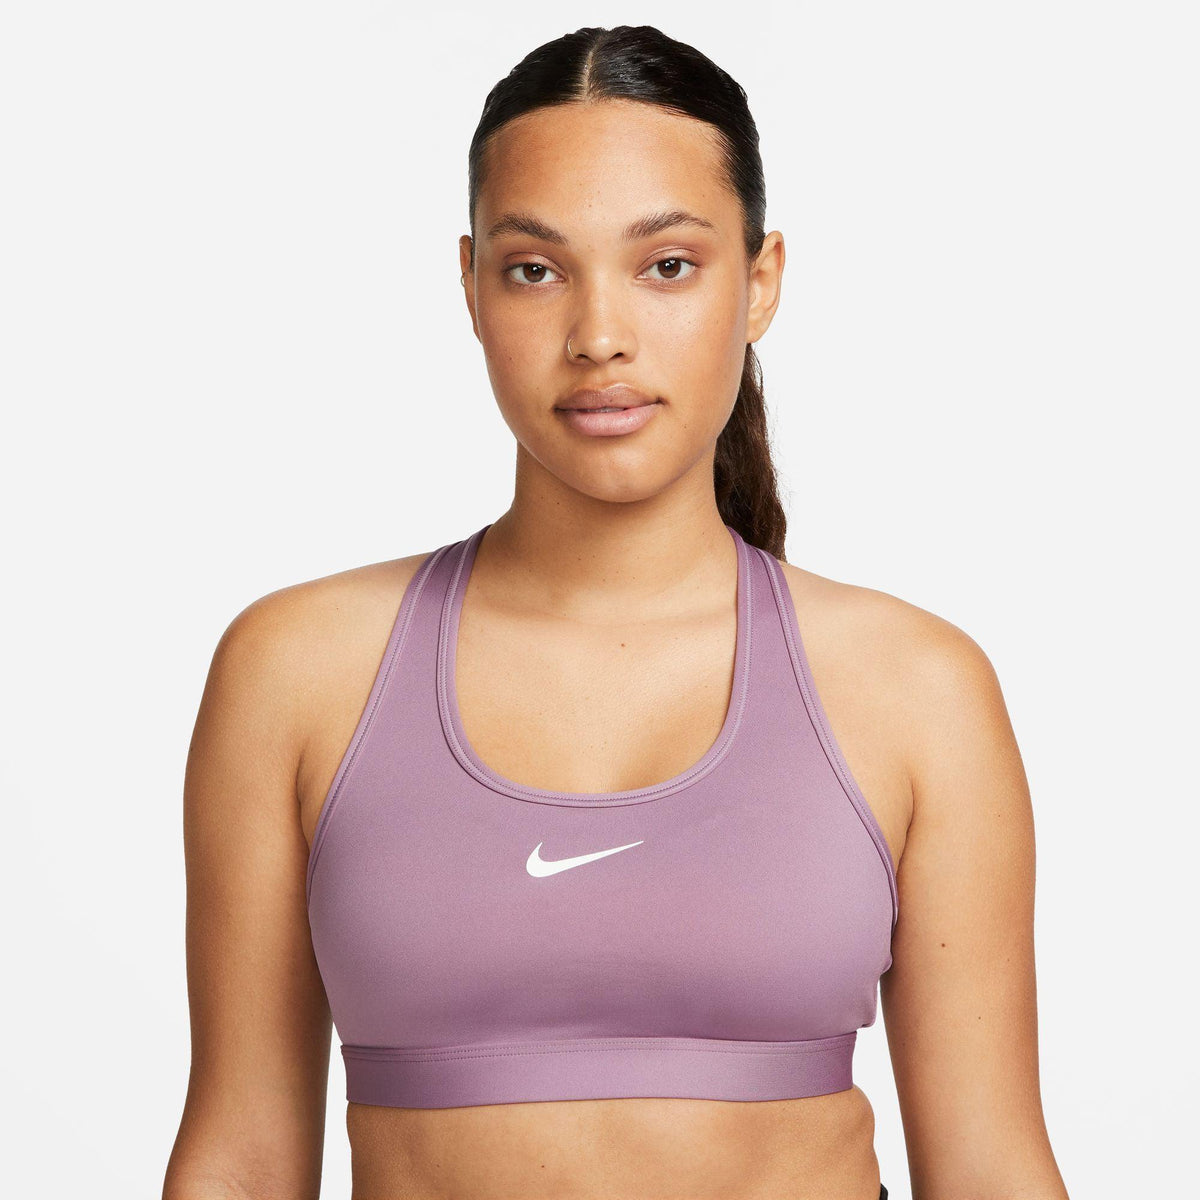 Nike-Women's Nike Swoosh Medium Support-Violet Dust/White-Pacers Running